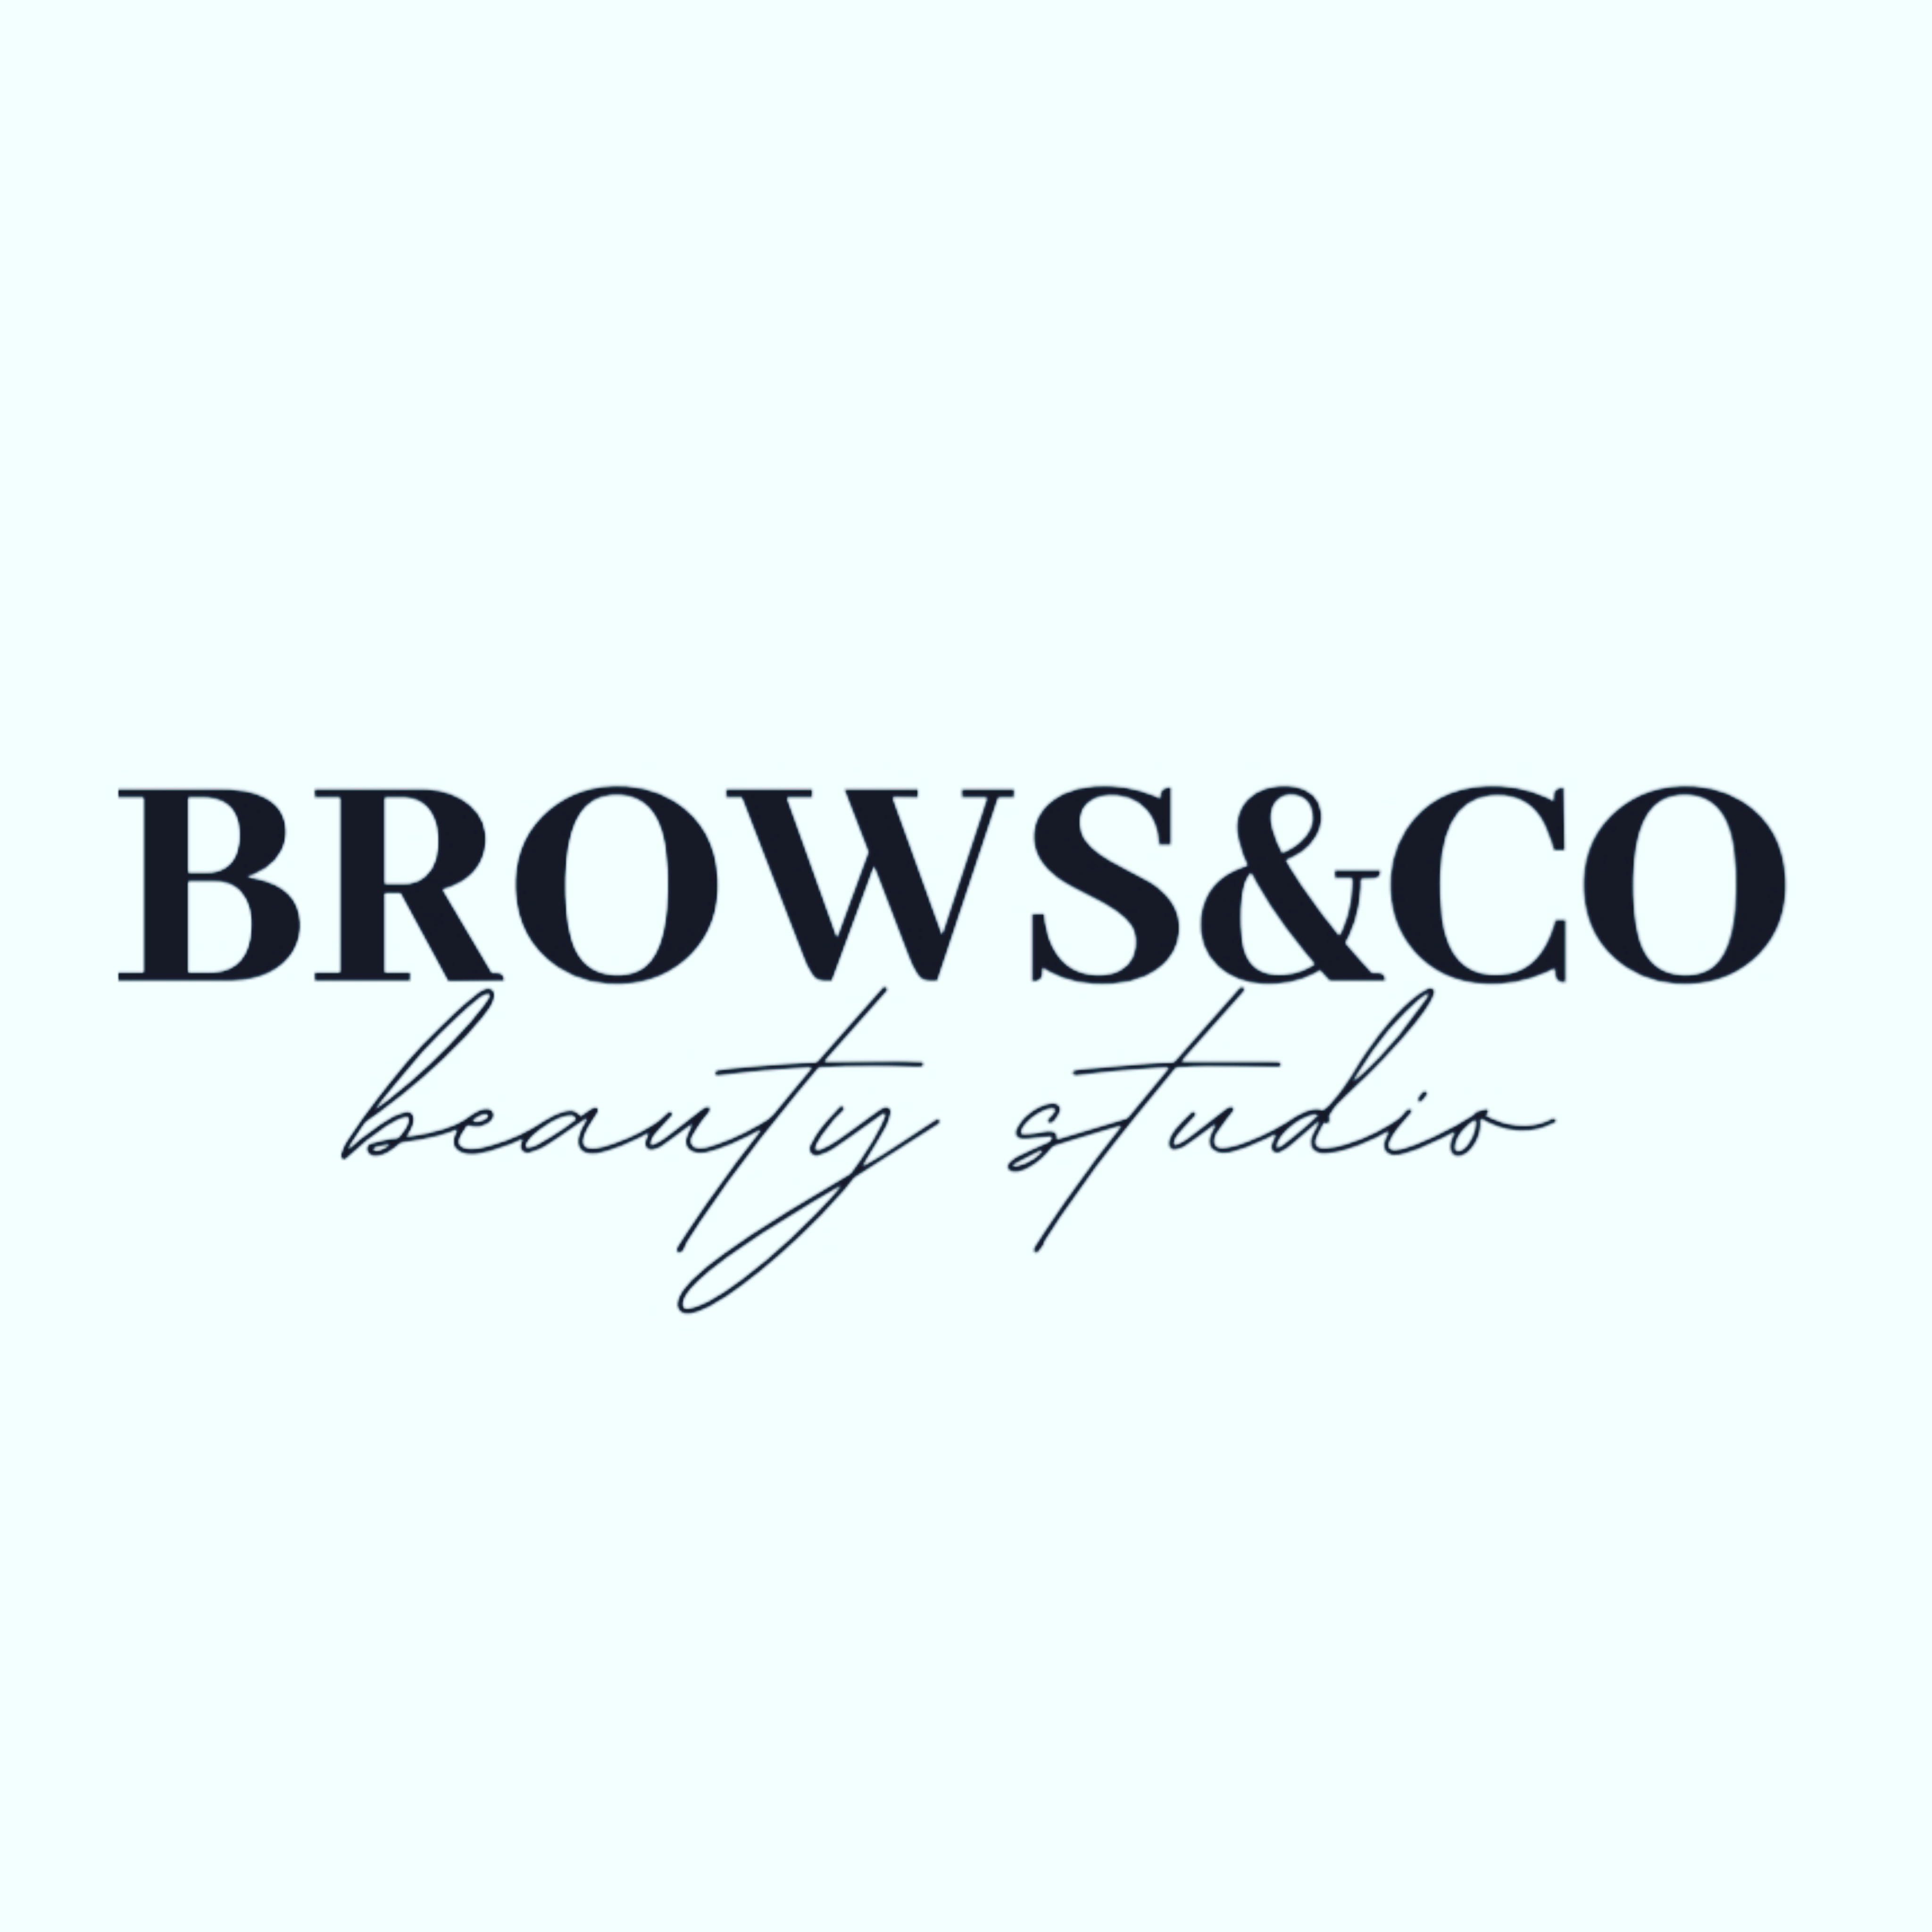 BROWS&CO beauty studio image